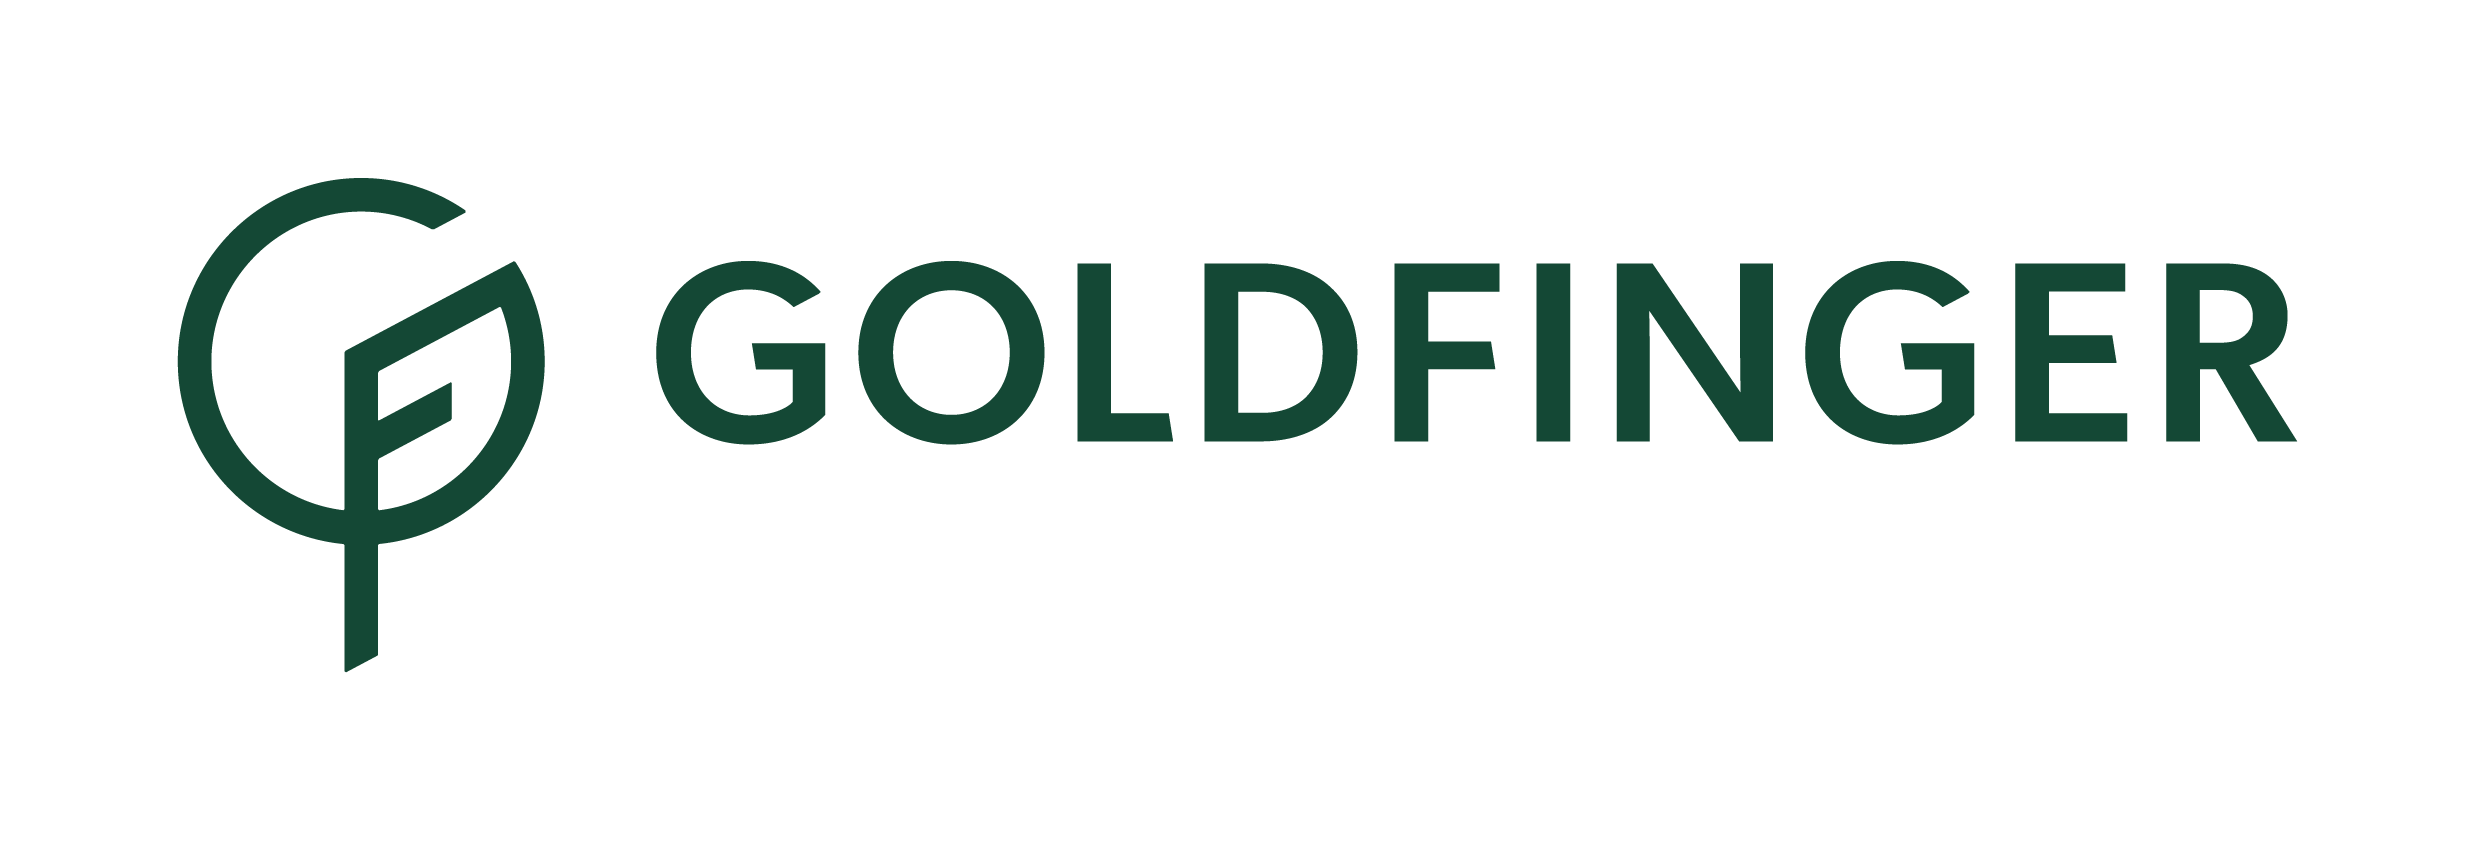 Goldfinger Primary Rgb